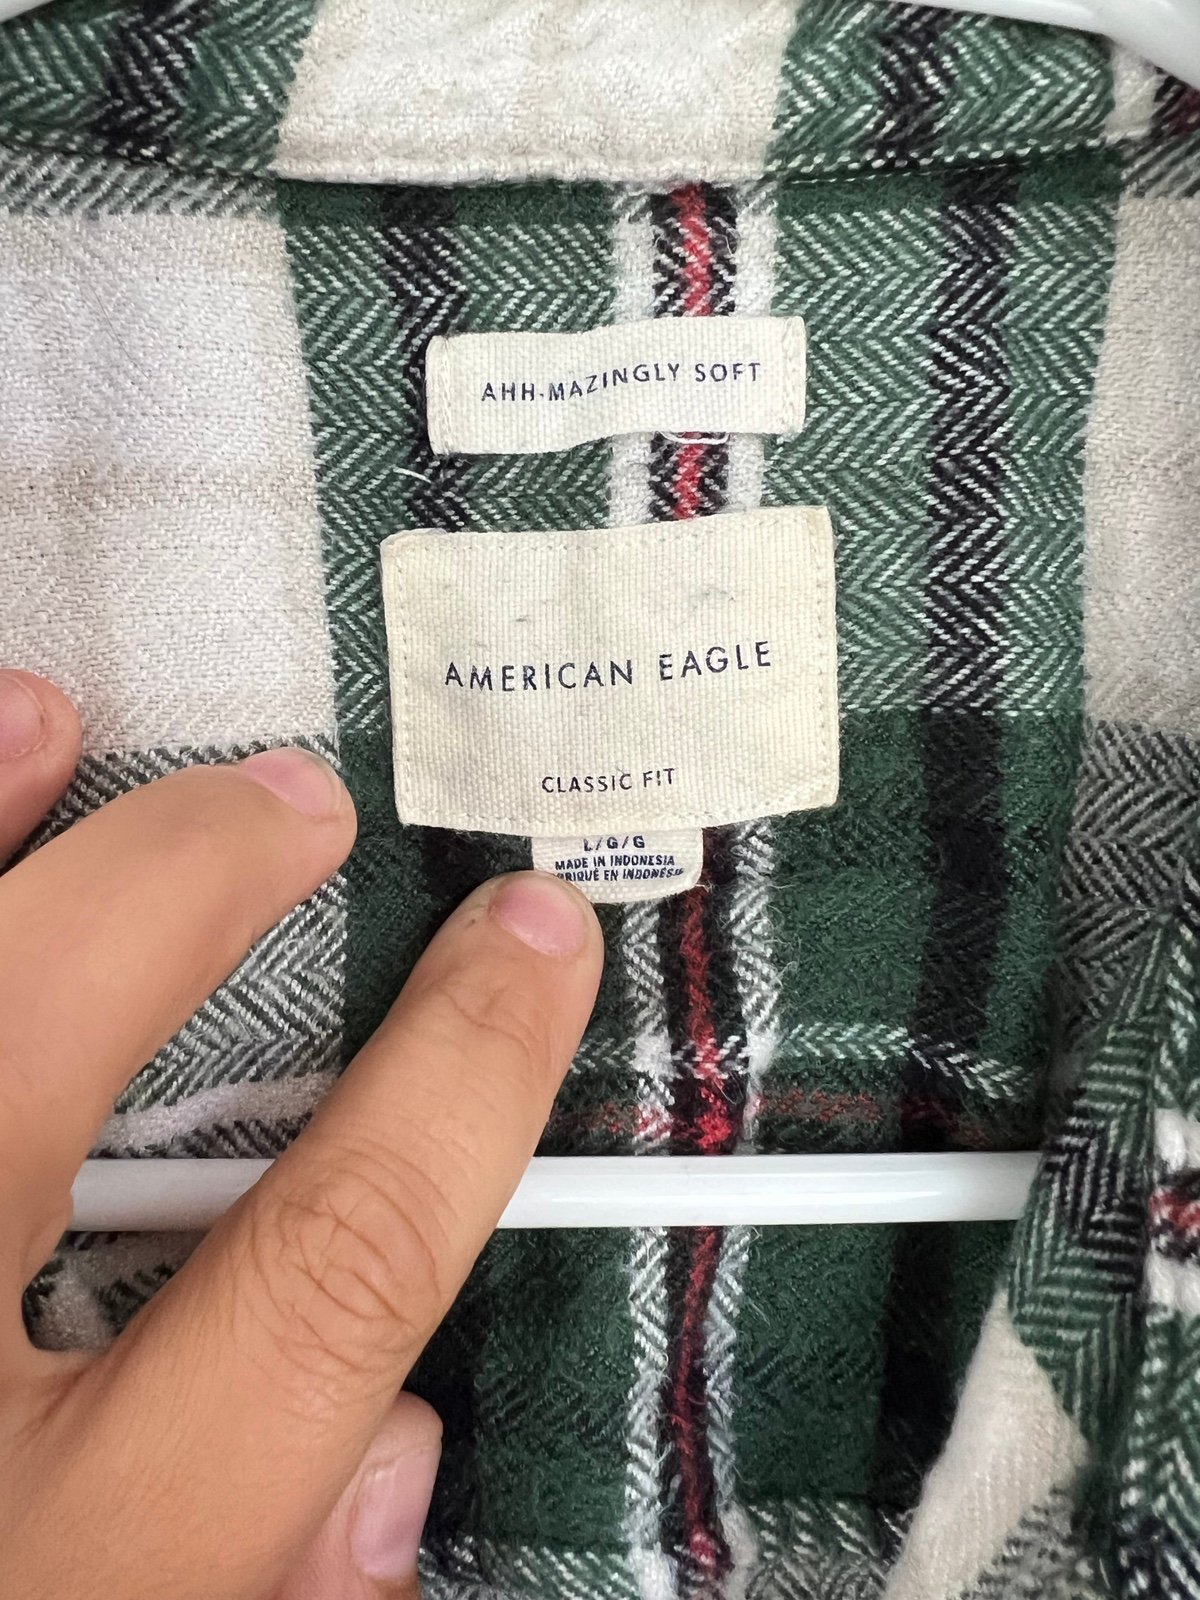 Classic American Eagle Plaid Shirt Green Large i2u2xX0RF just for you